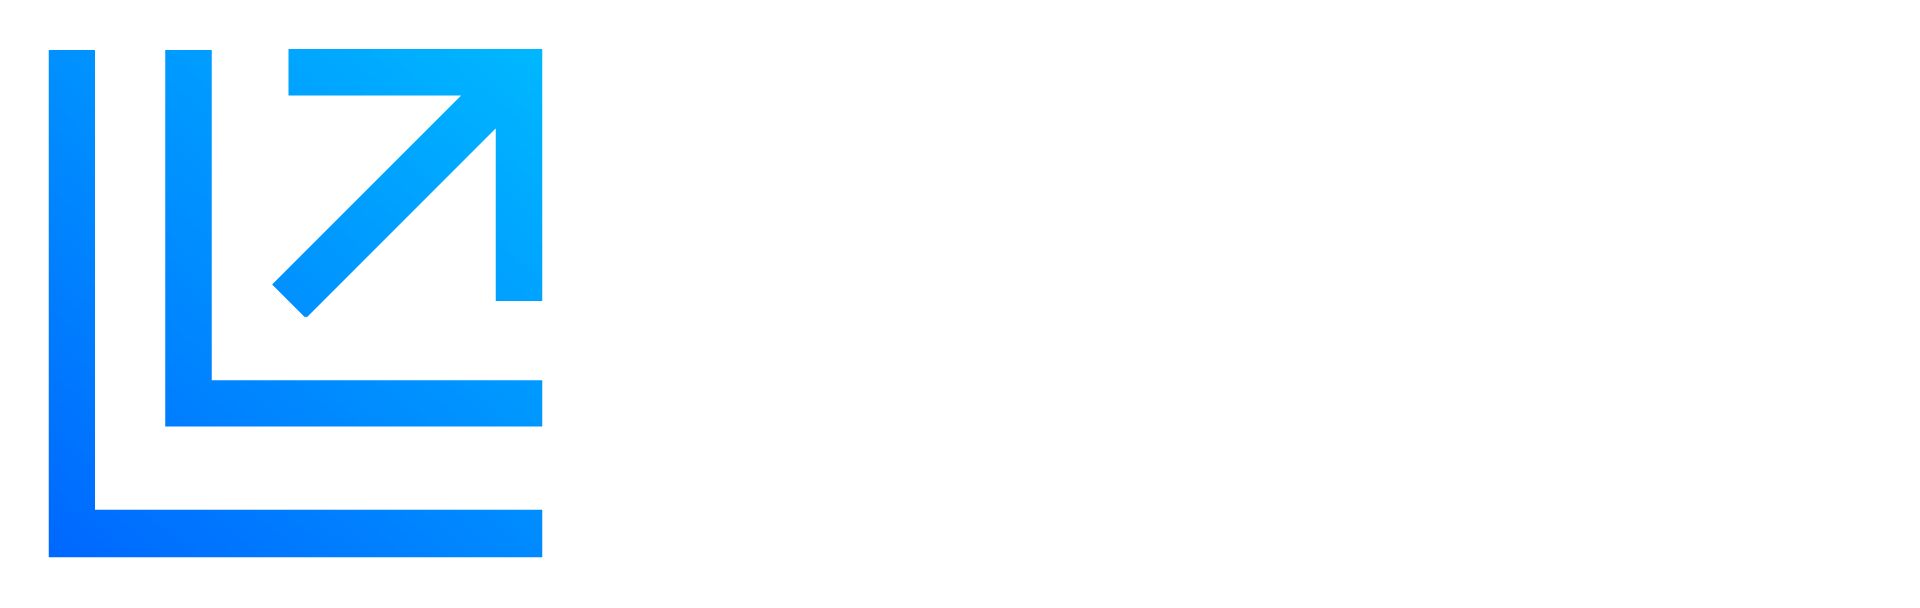 Cmj Logo White 03 - CMJ Consultoria Empresarial